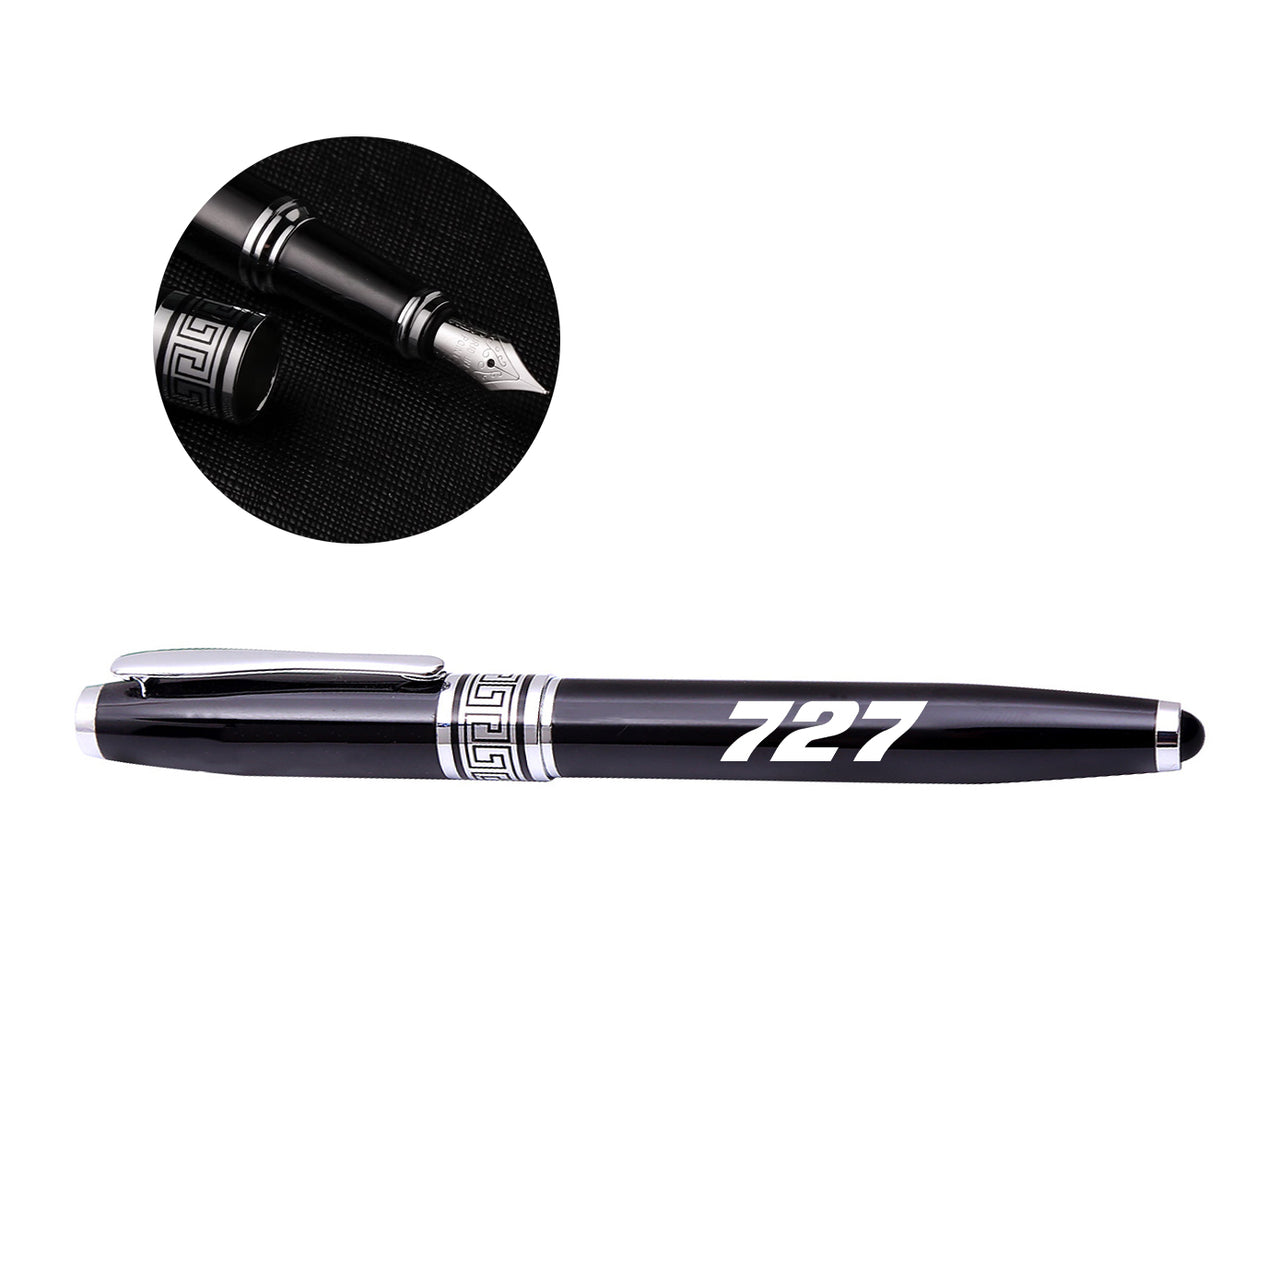 727 Flat Text Designed Pens